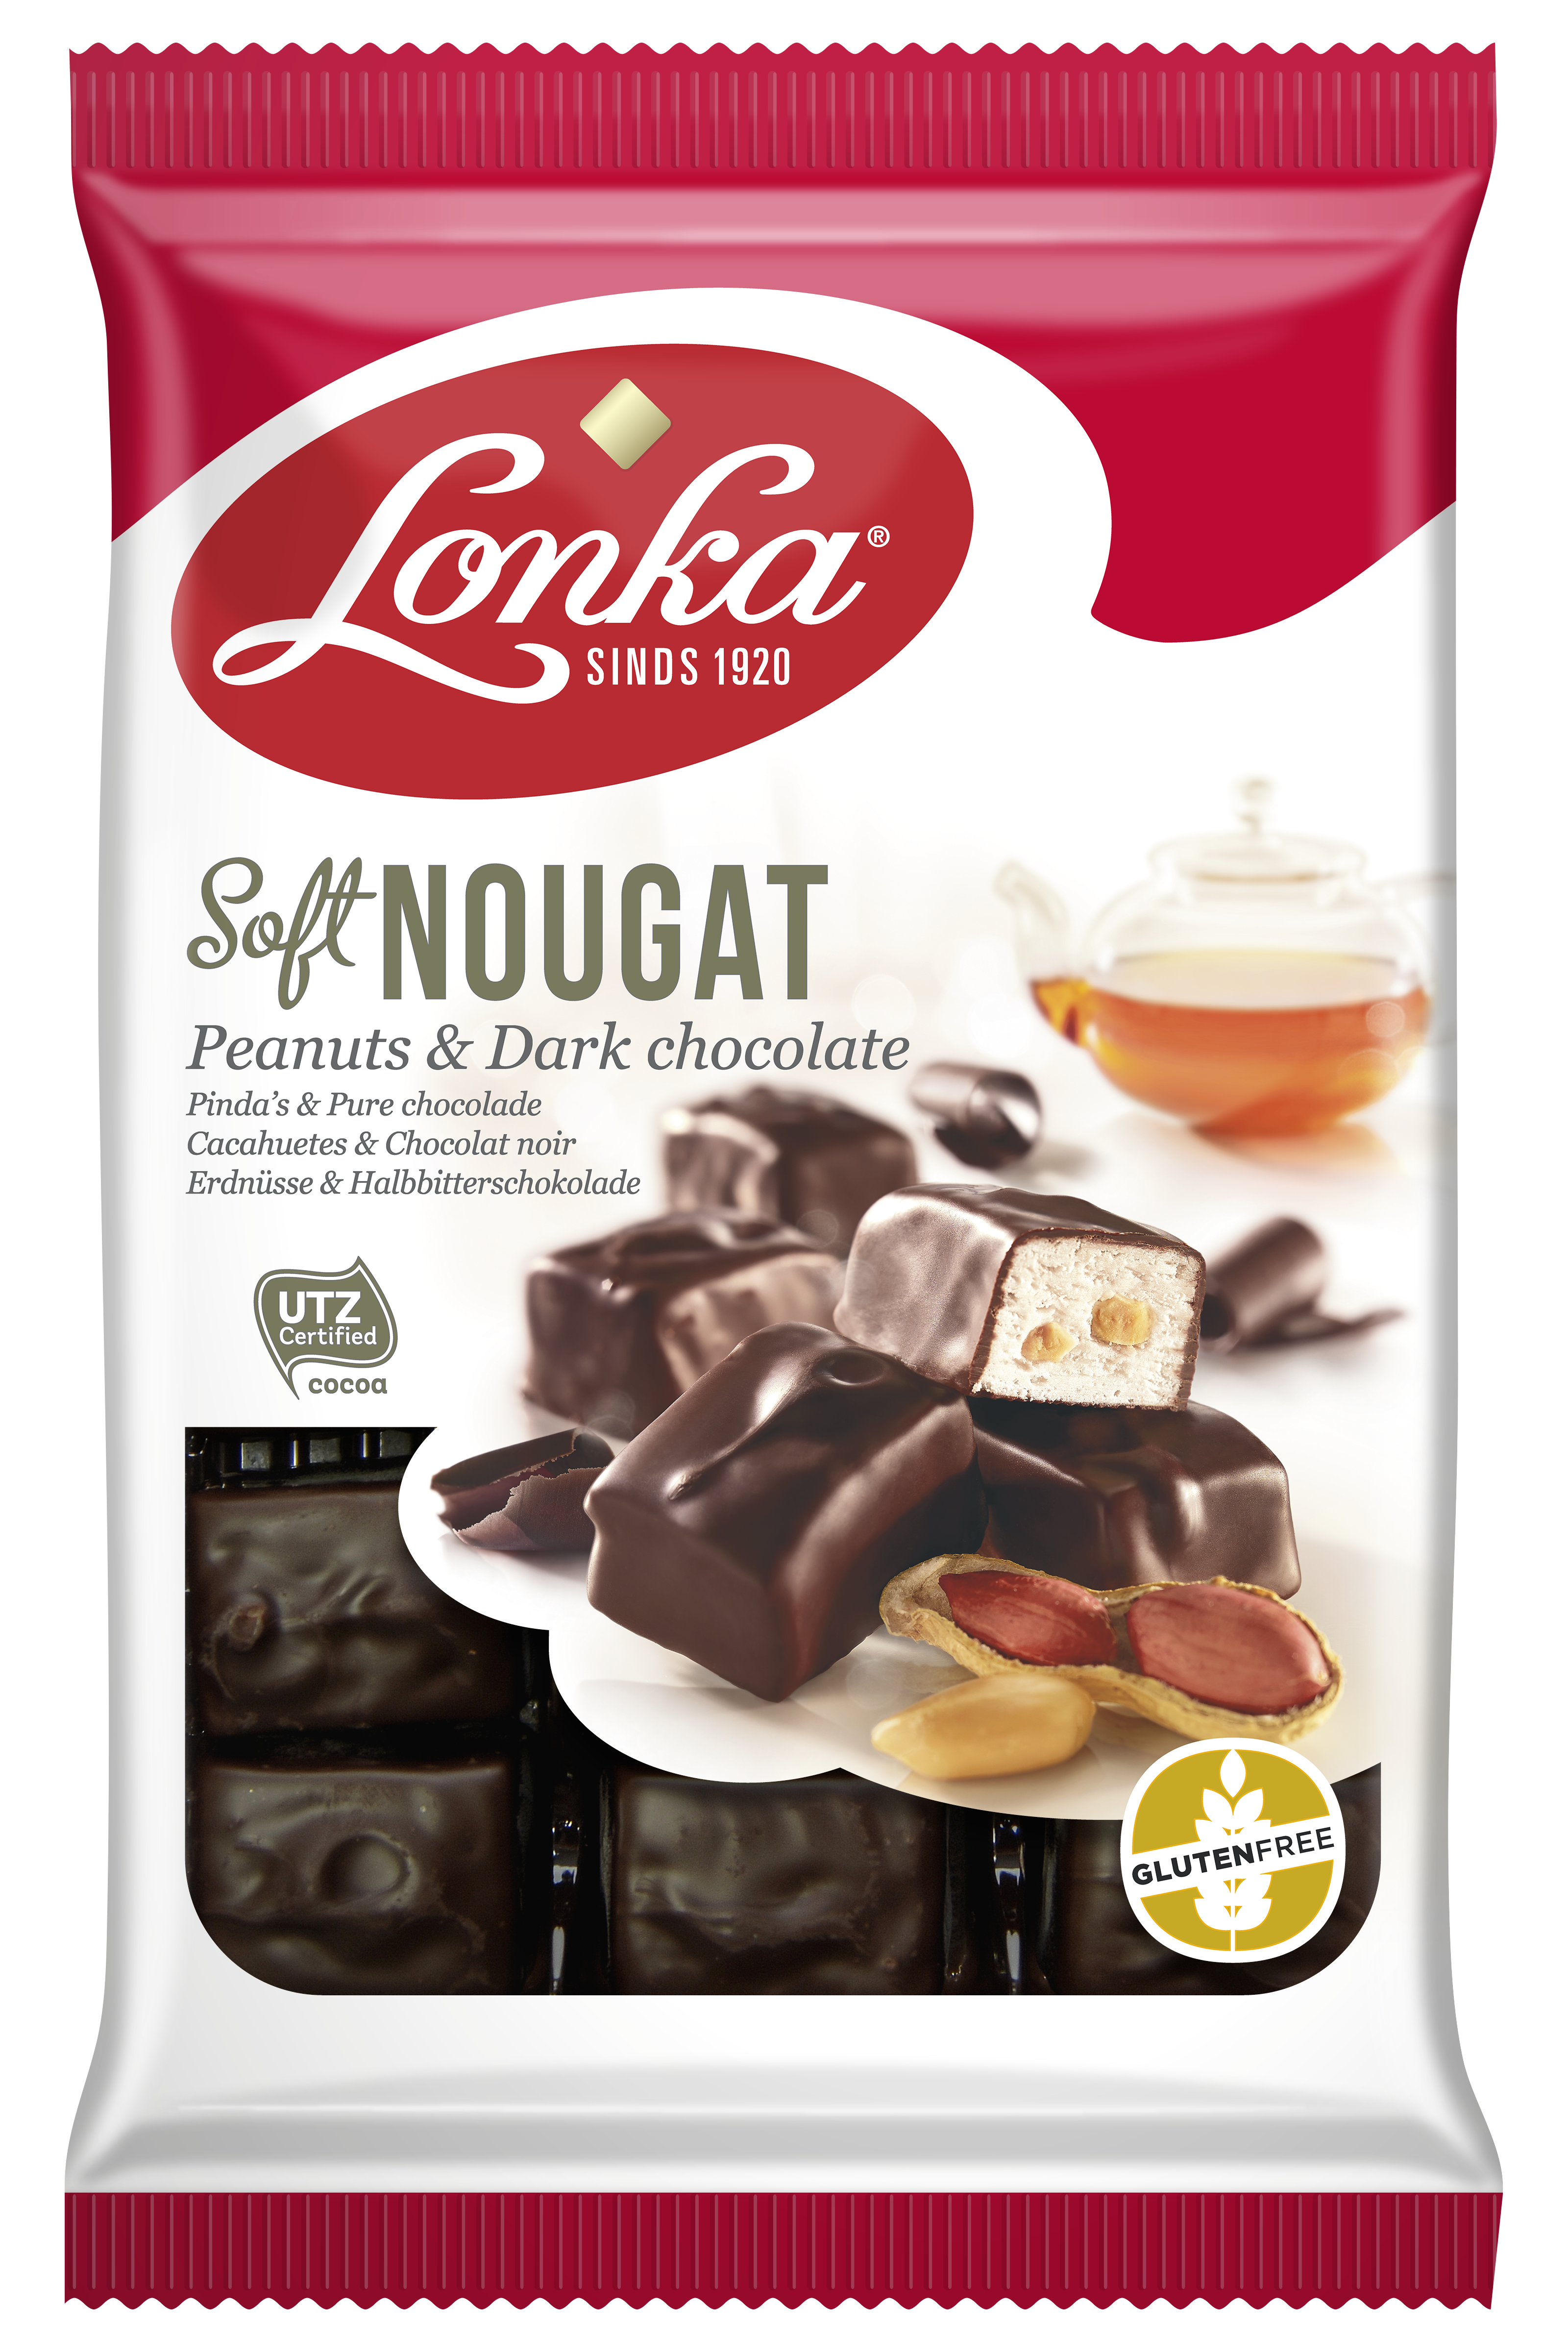 Soft Nougat Peanuts & Dark Chocolate